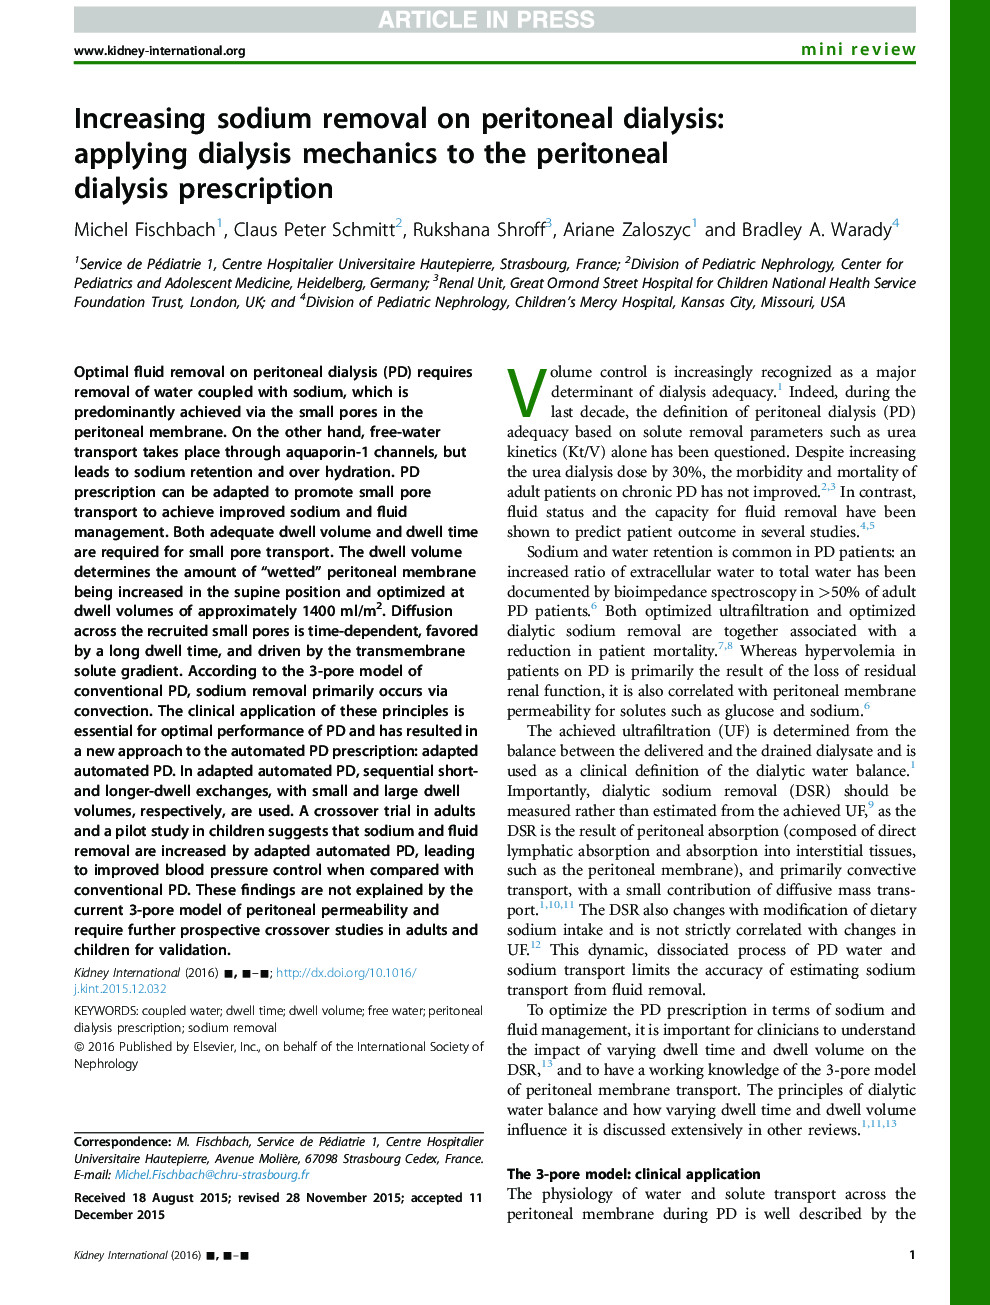 Increasing sodium removal on peritoneal dialysis: applying dialysis mechanics to the peritoneal dialysis prescription